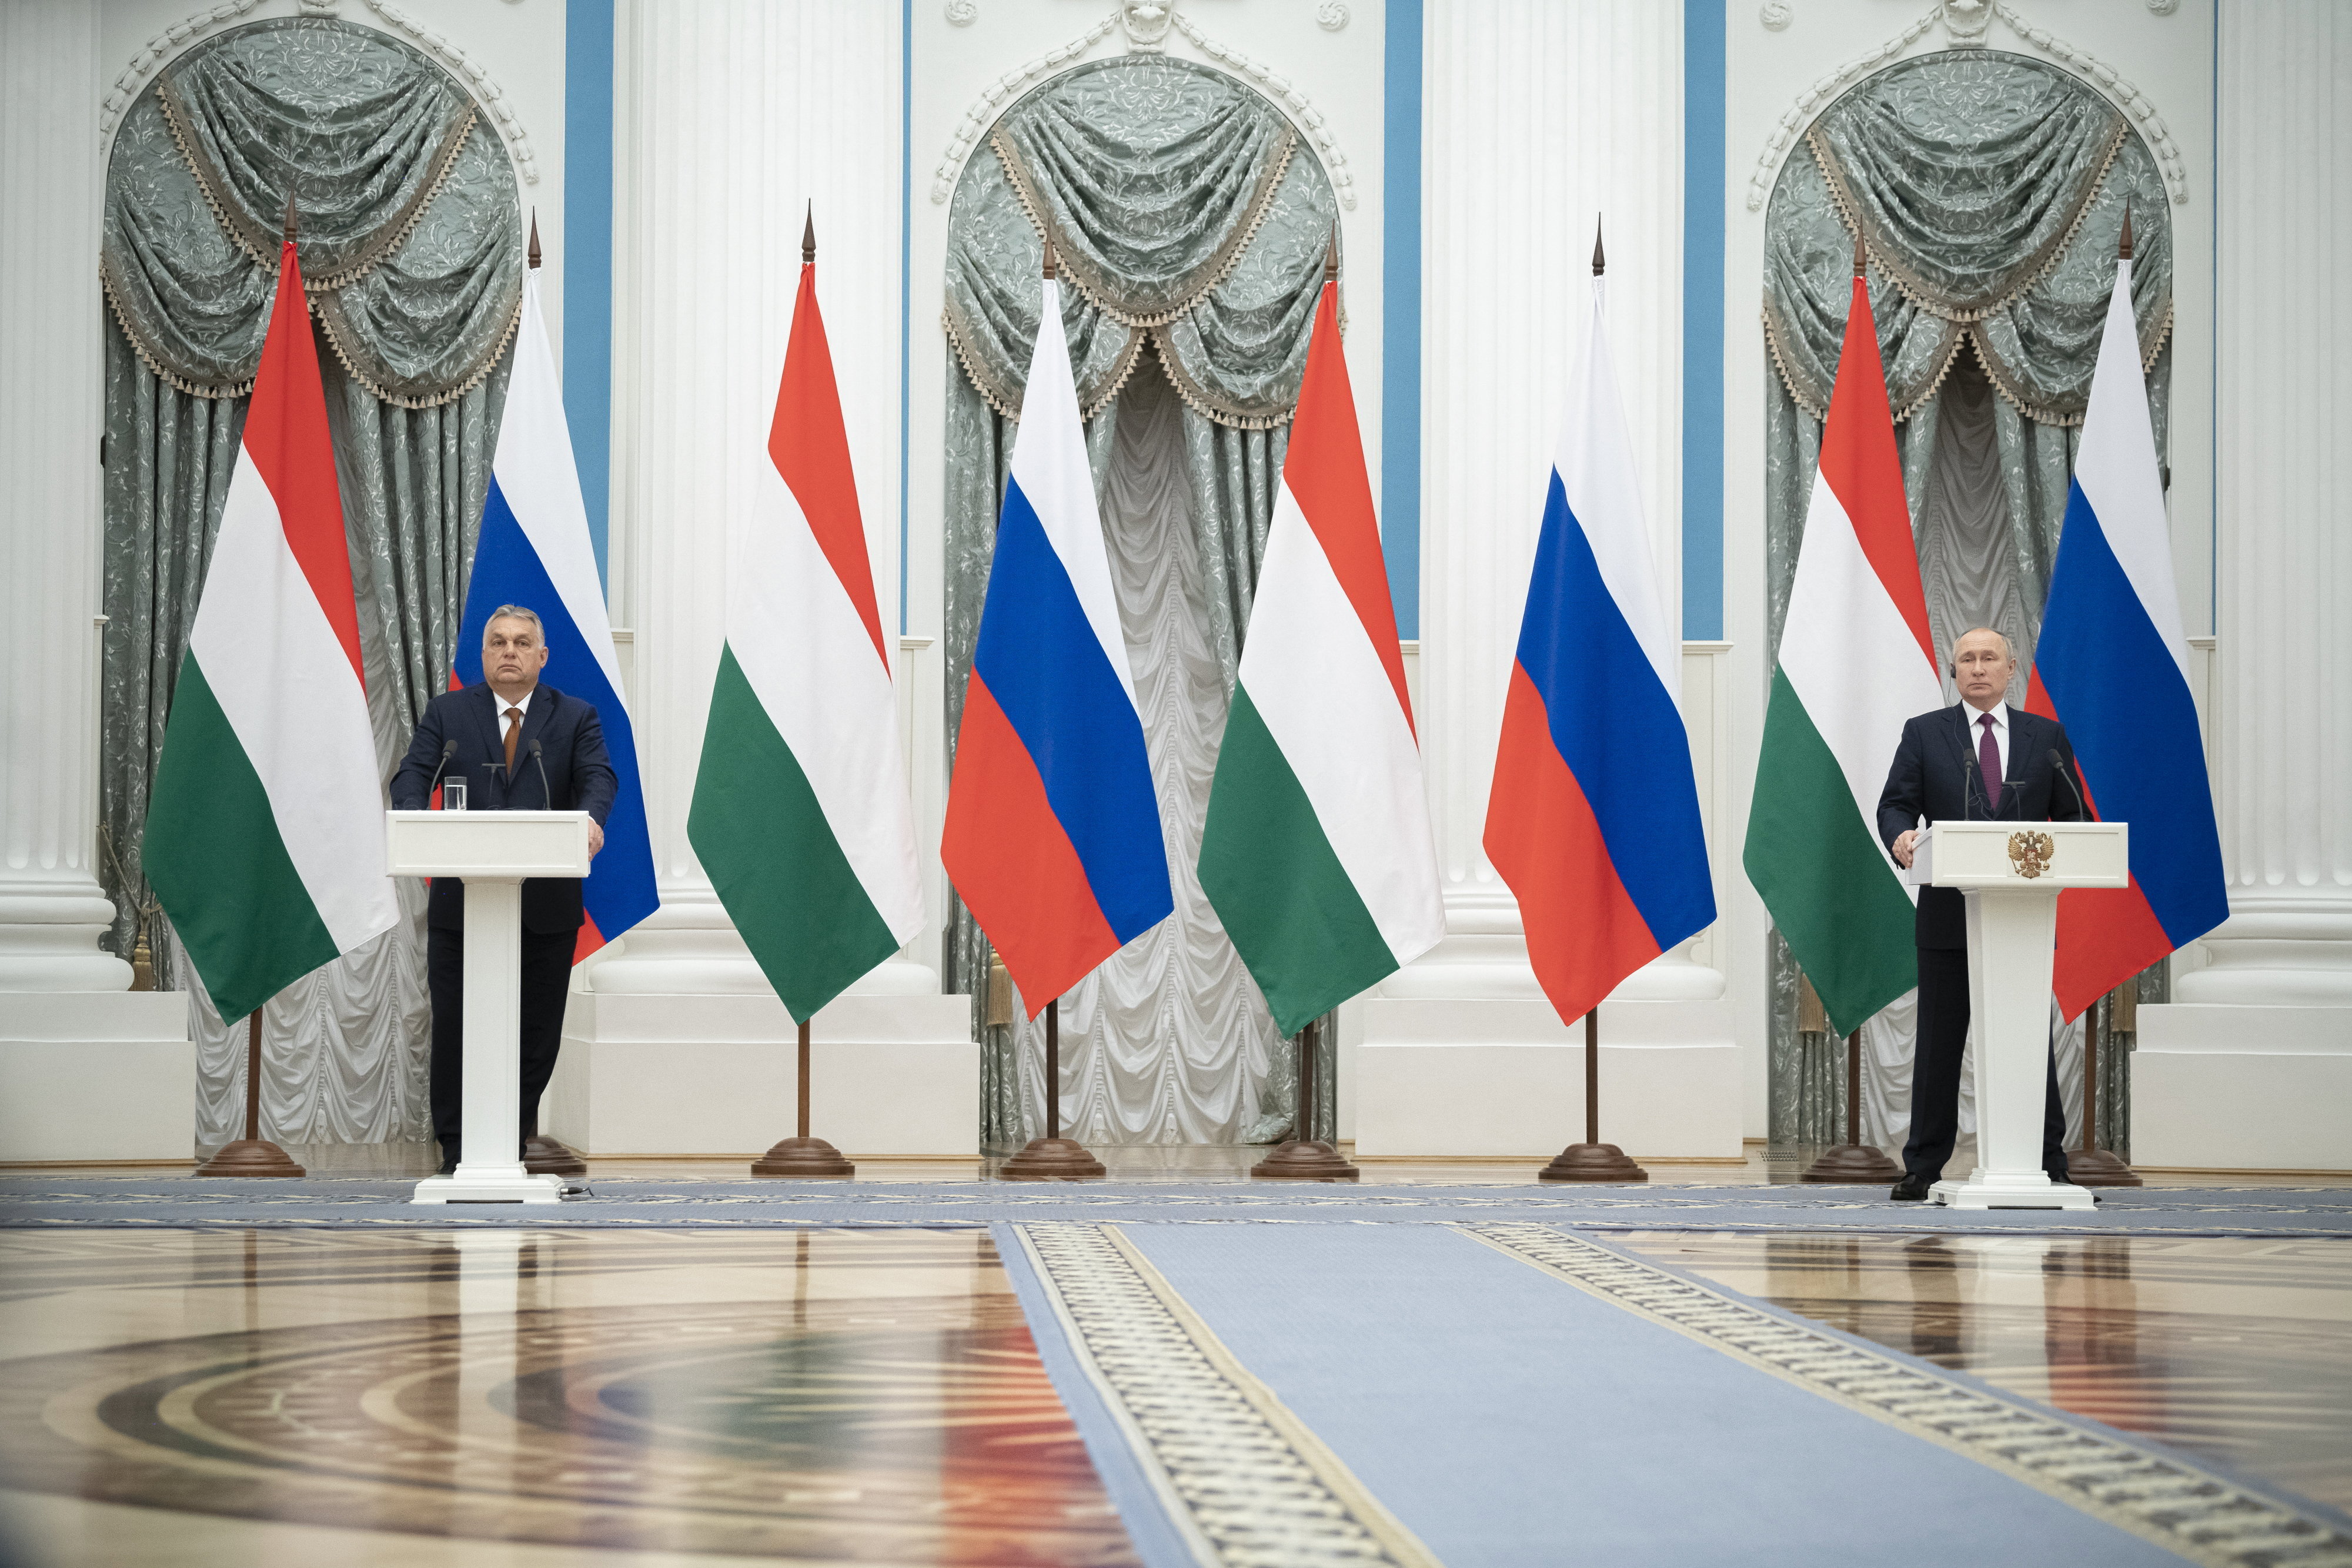 Opposition: “Viktor Orbán has become Putin’s puppet”